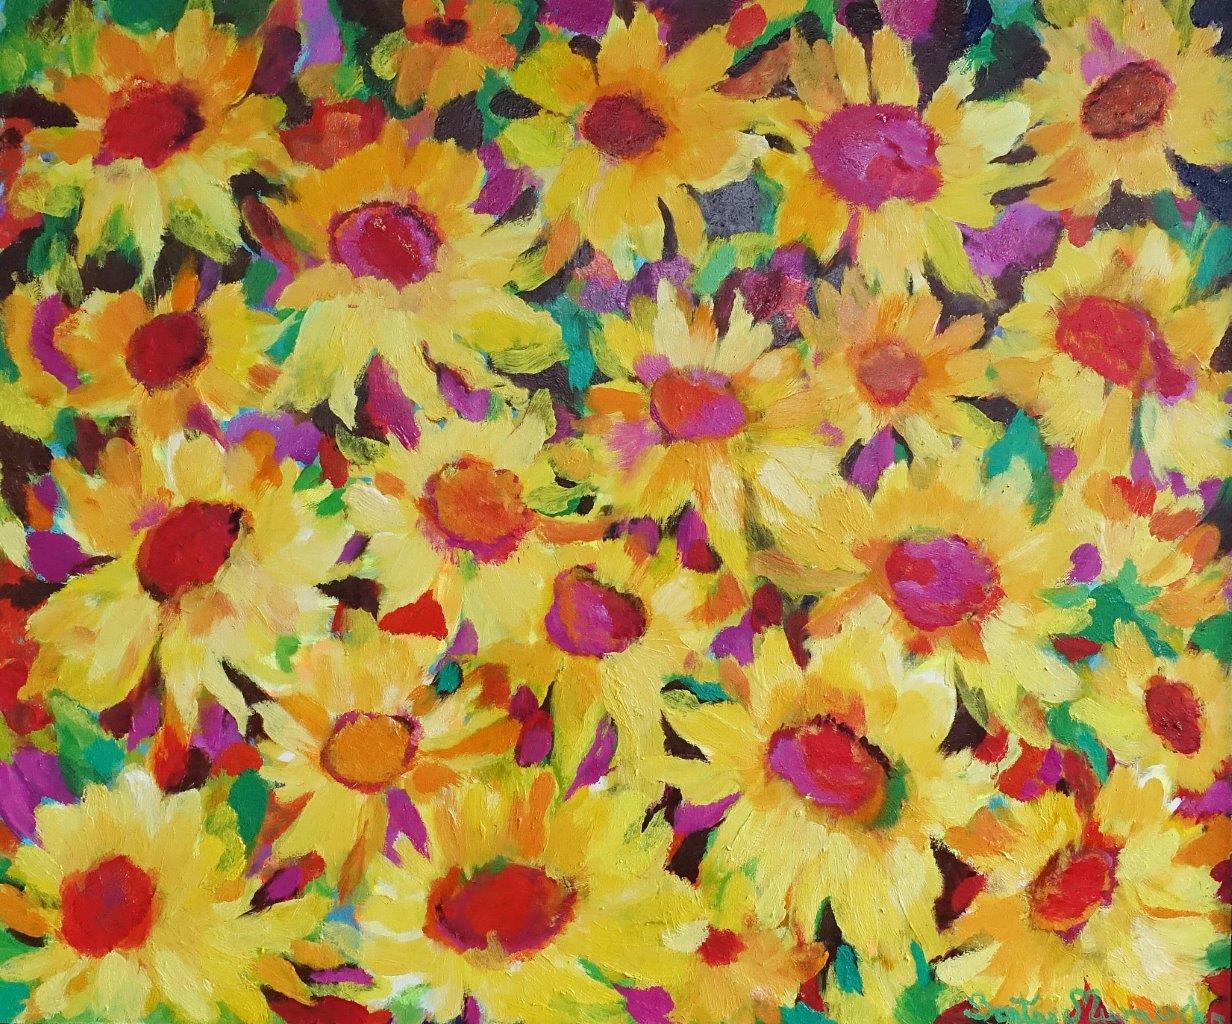 Beata Murawska - Fall night sunflowers (Oil on Canvas | Größe: 126 x 106 cm | Preis: 7000 PLN)